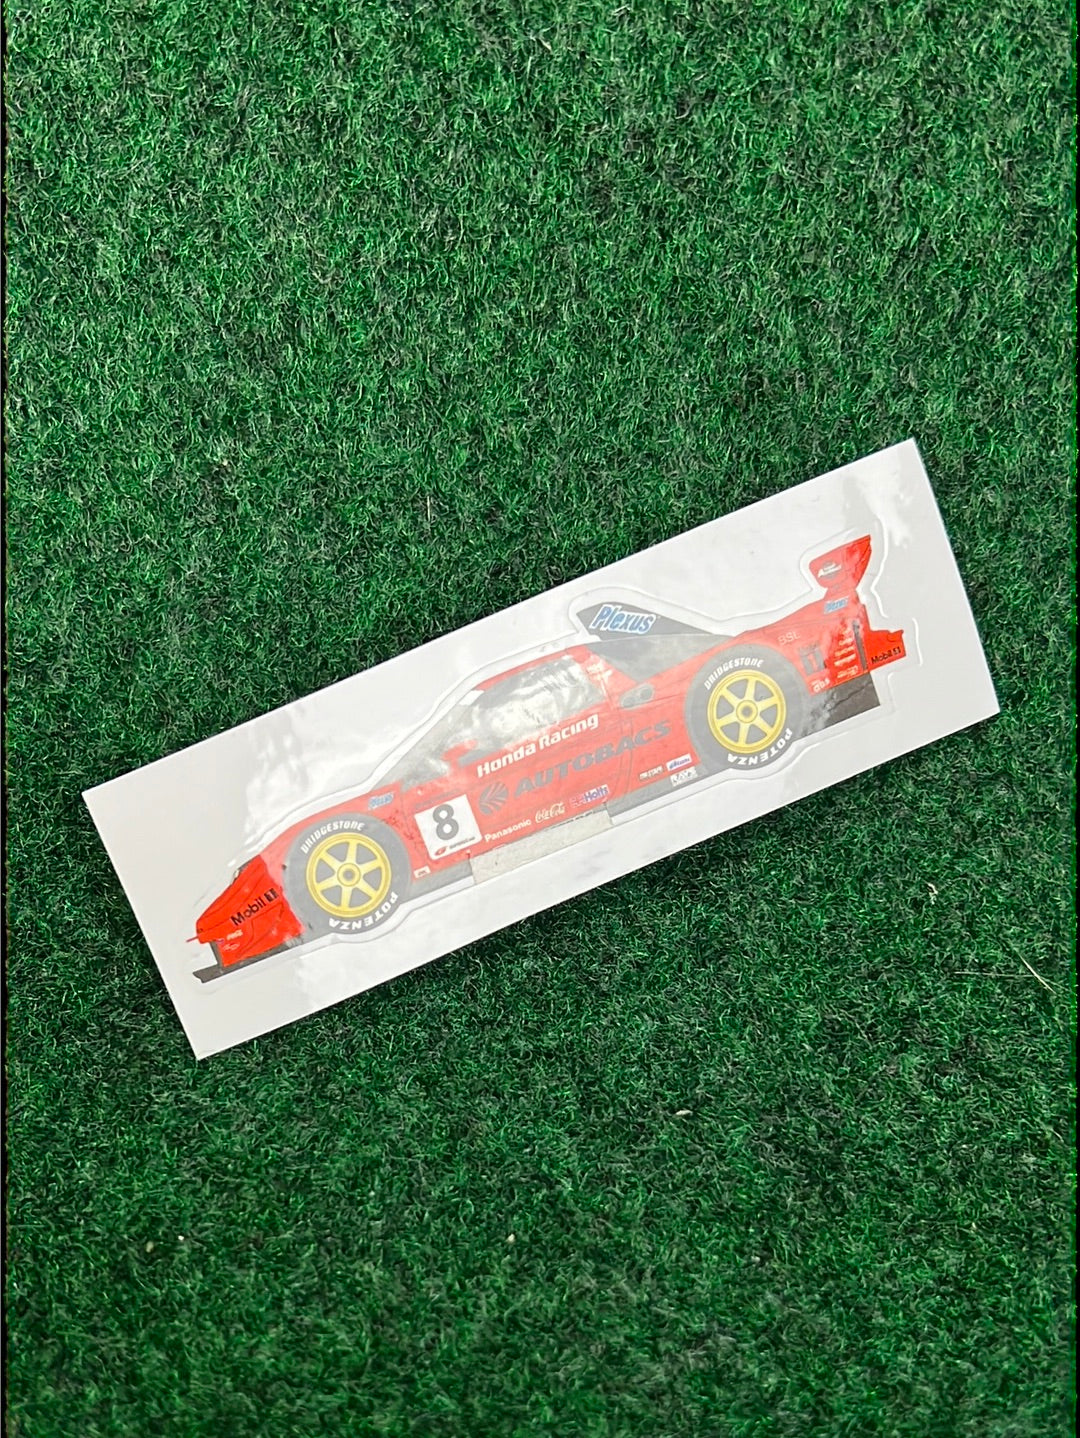 ARTA - Autobacs Racing Team Aguri Sticker Set of 6